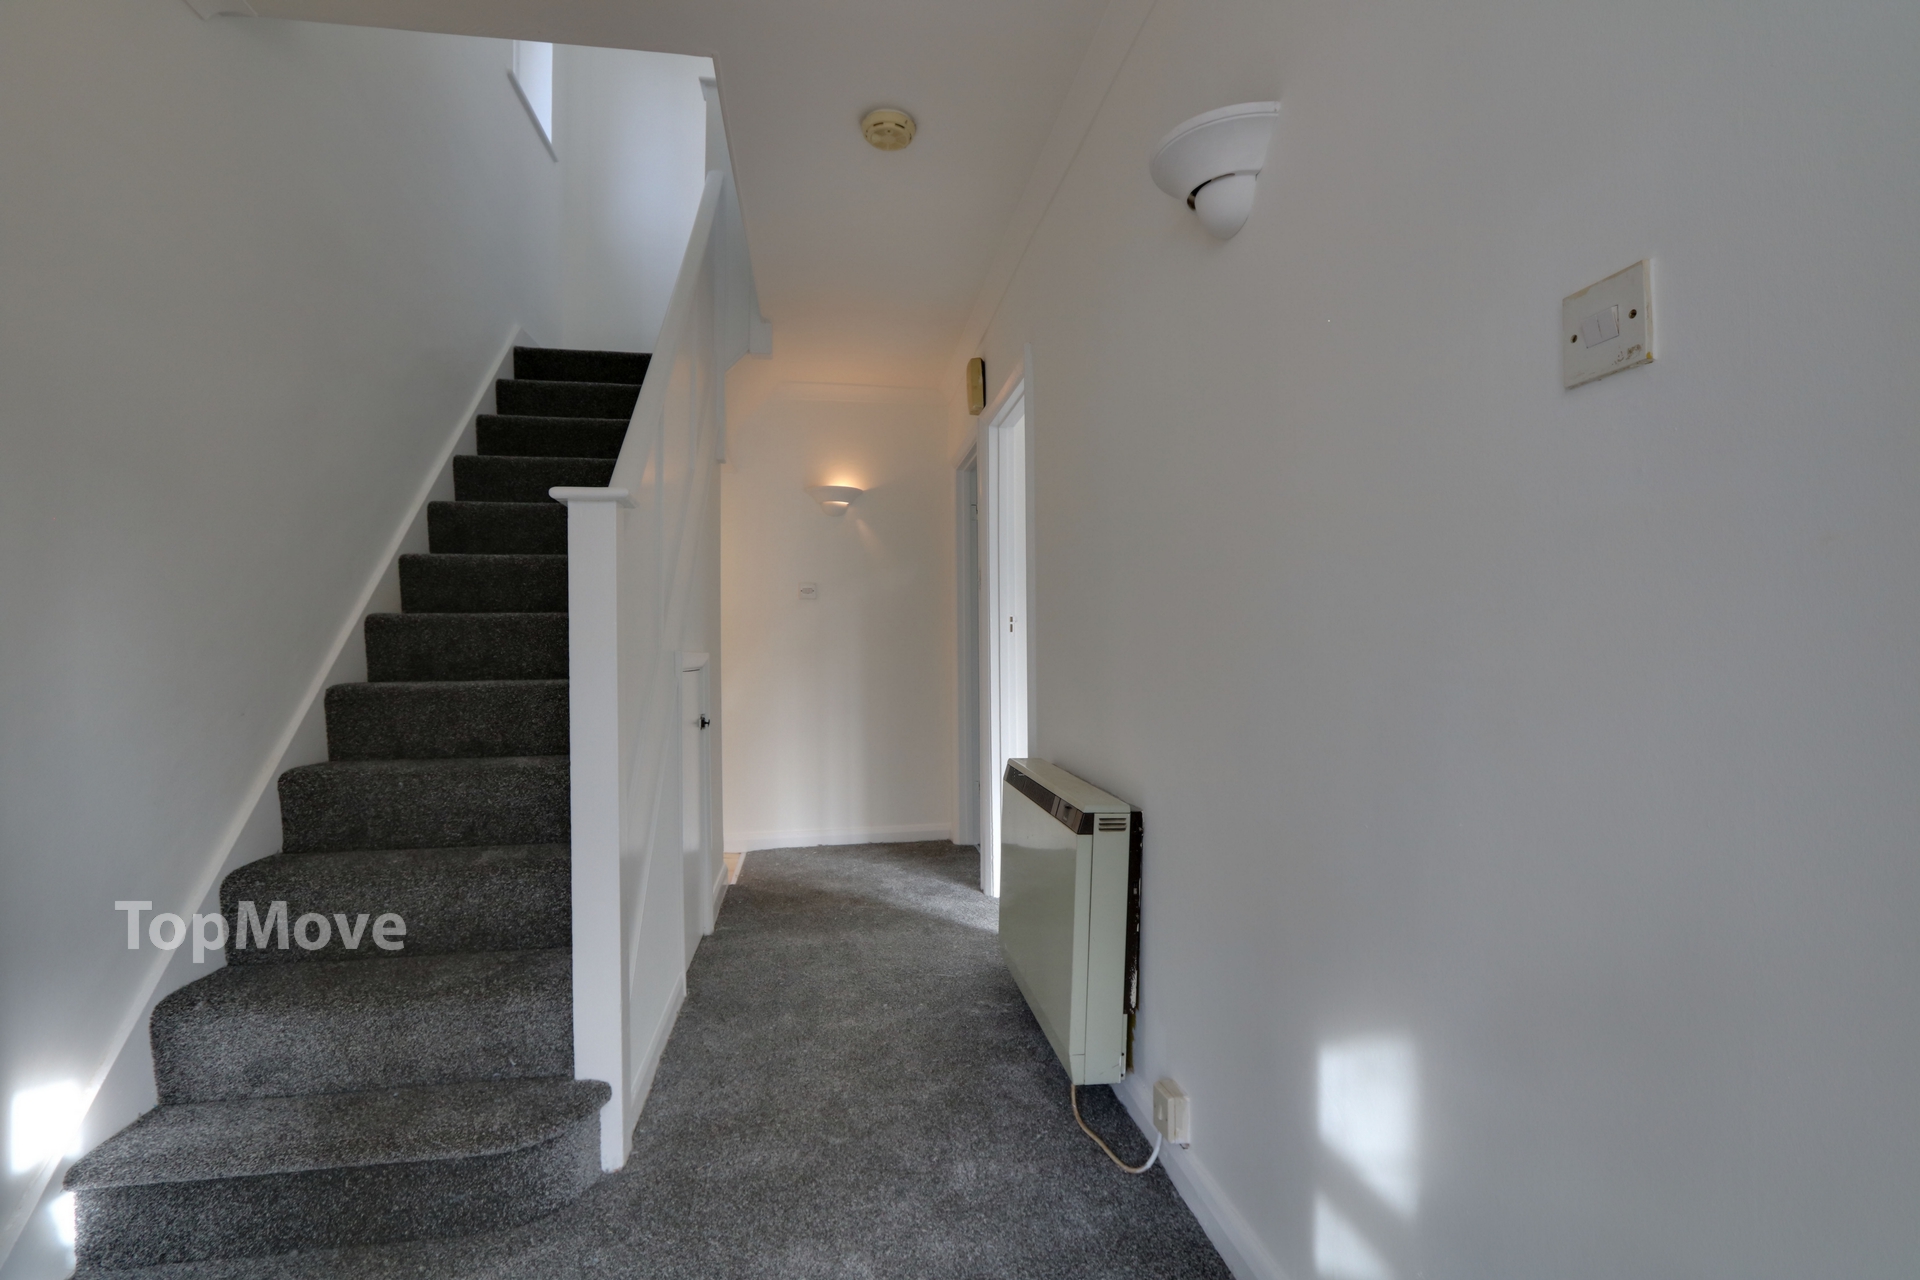 3 bedrooms semi detached, 109 Violet Lane Croydon Surrey